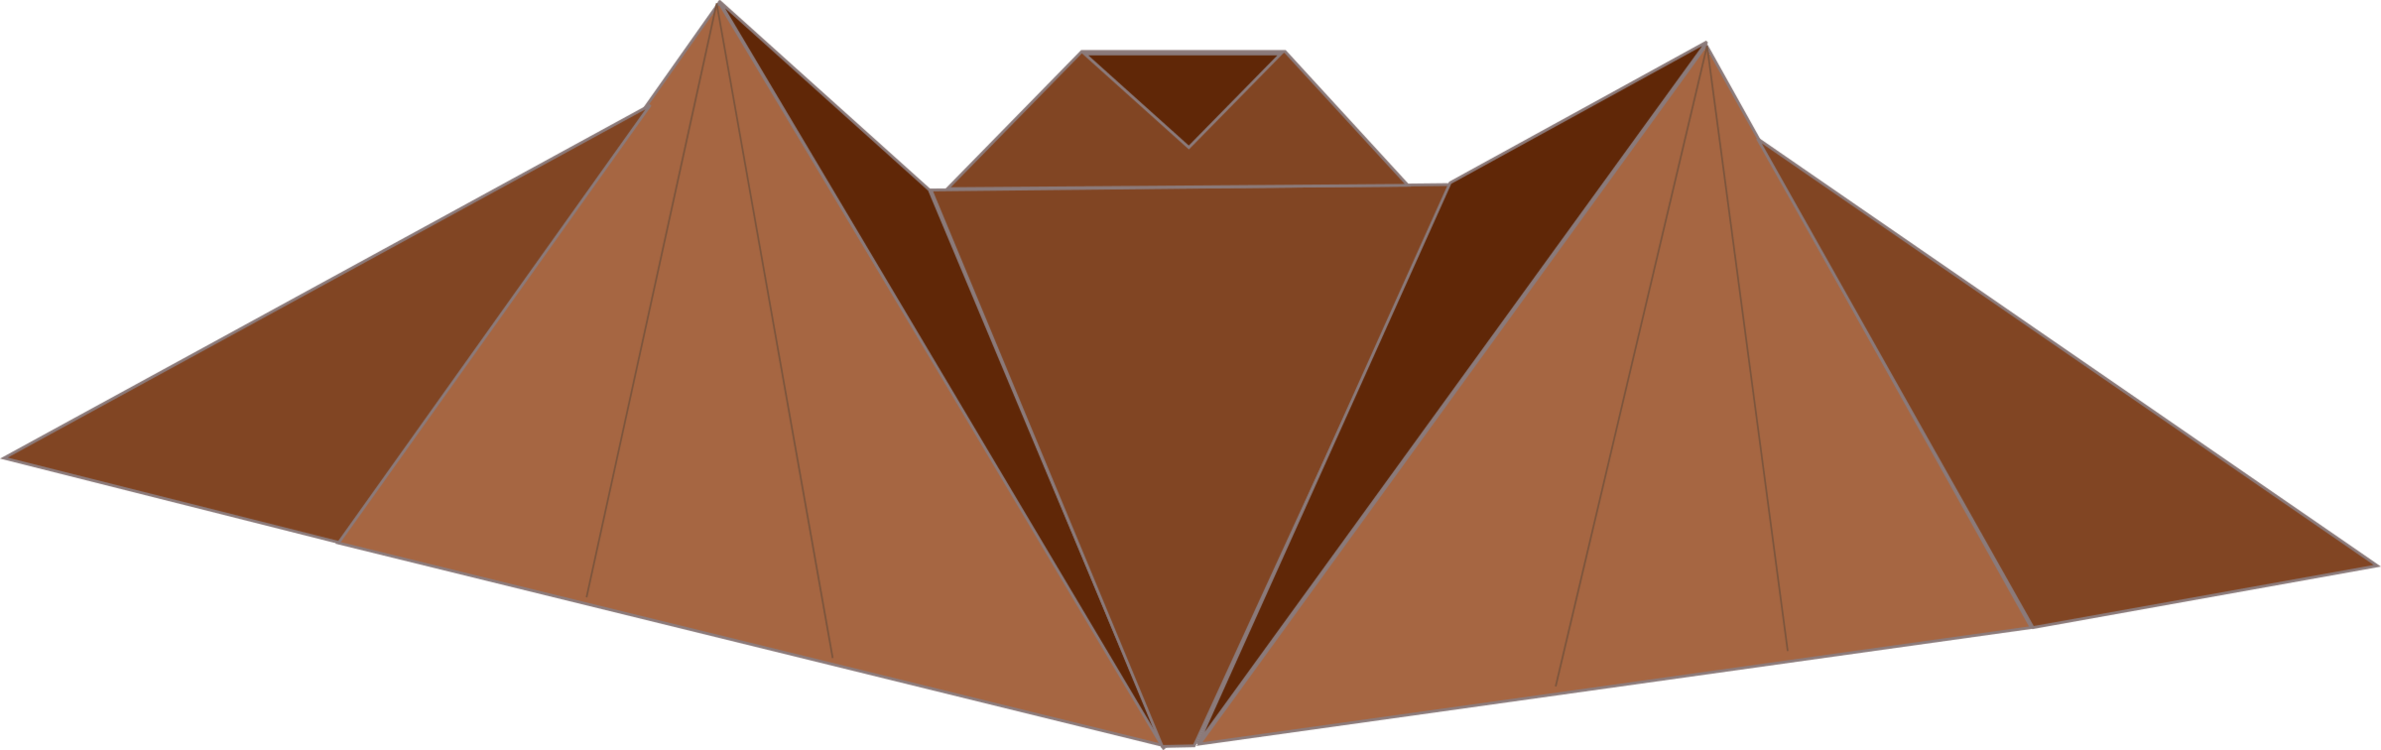 Orange Triangle M Logo - Triangle M 083vt Symmetry Pyramid Free Commercial Clipart